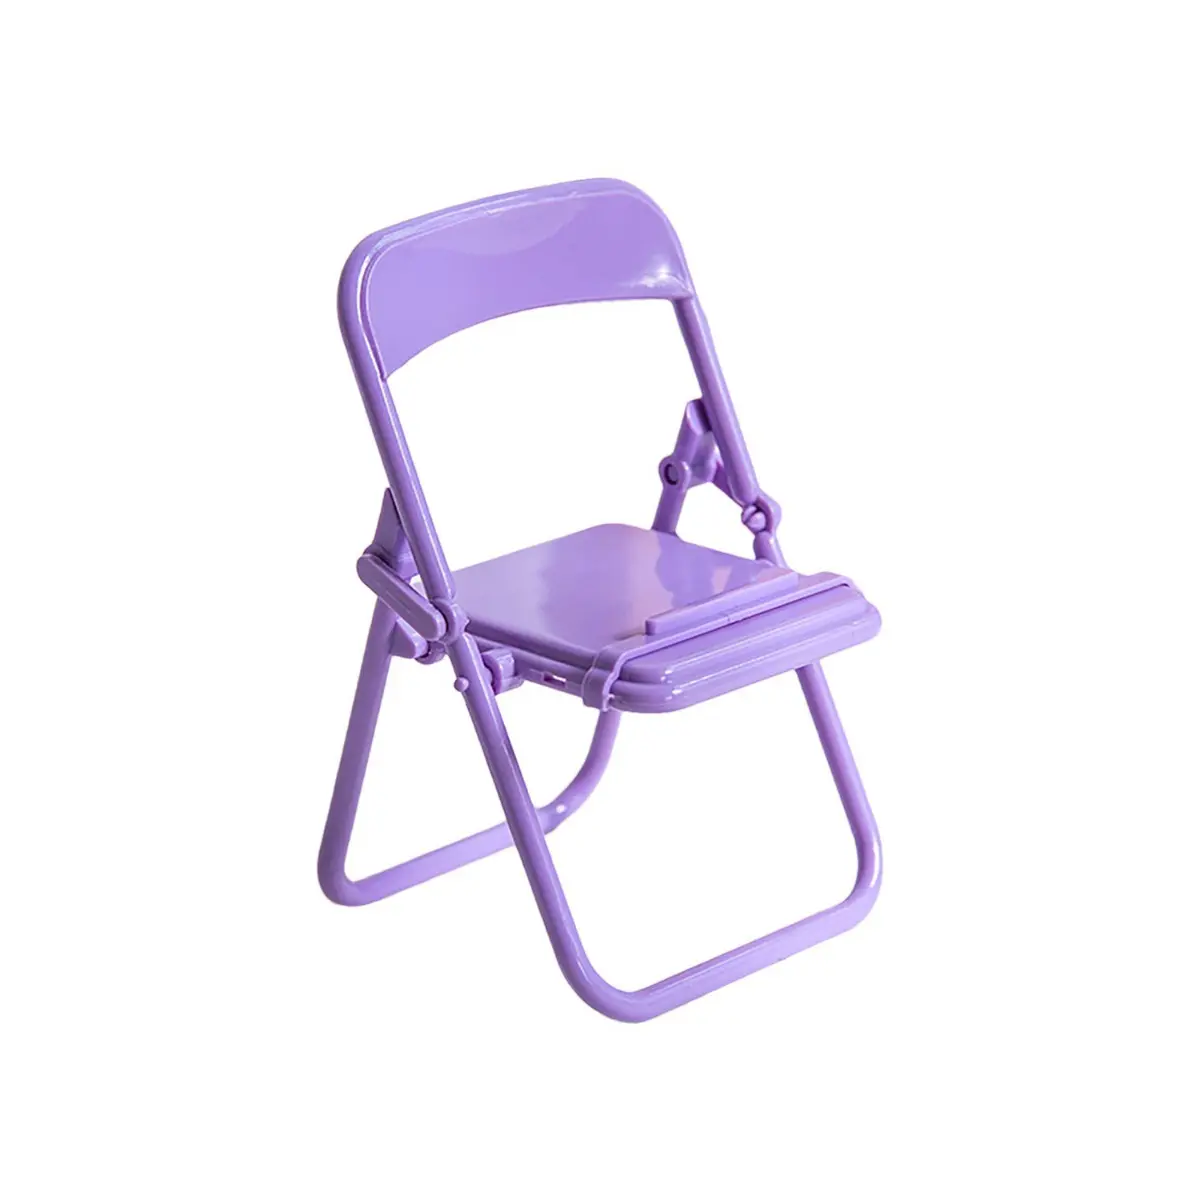 Suport scaun telefon mobil Logic, 3-12 inch, Mov